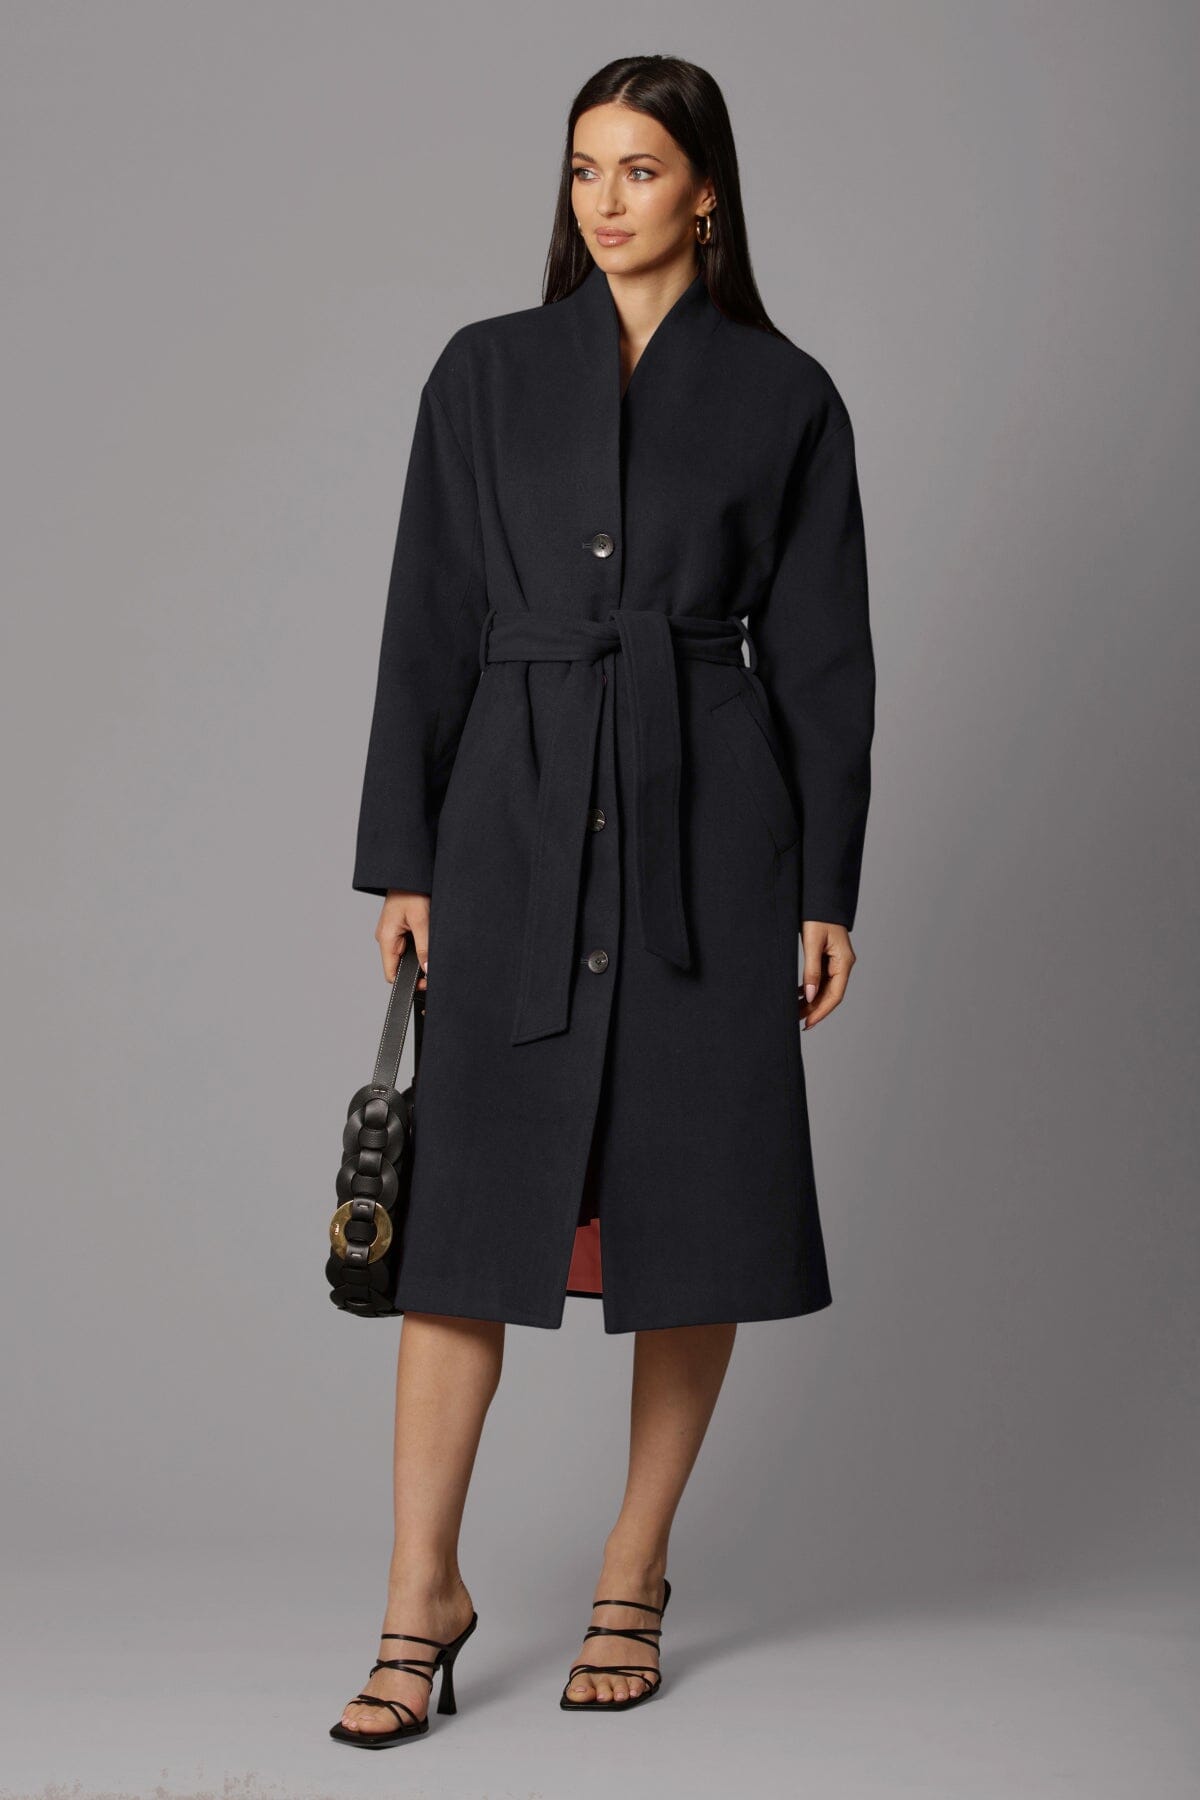 Black wool blend overlap collar long coat jacket - women's figure flattering modern sophisticated coats jackets for fall